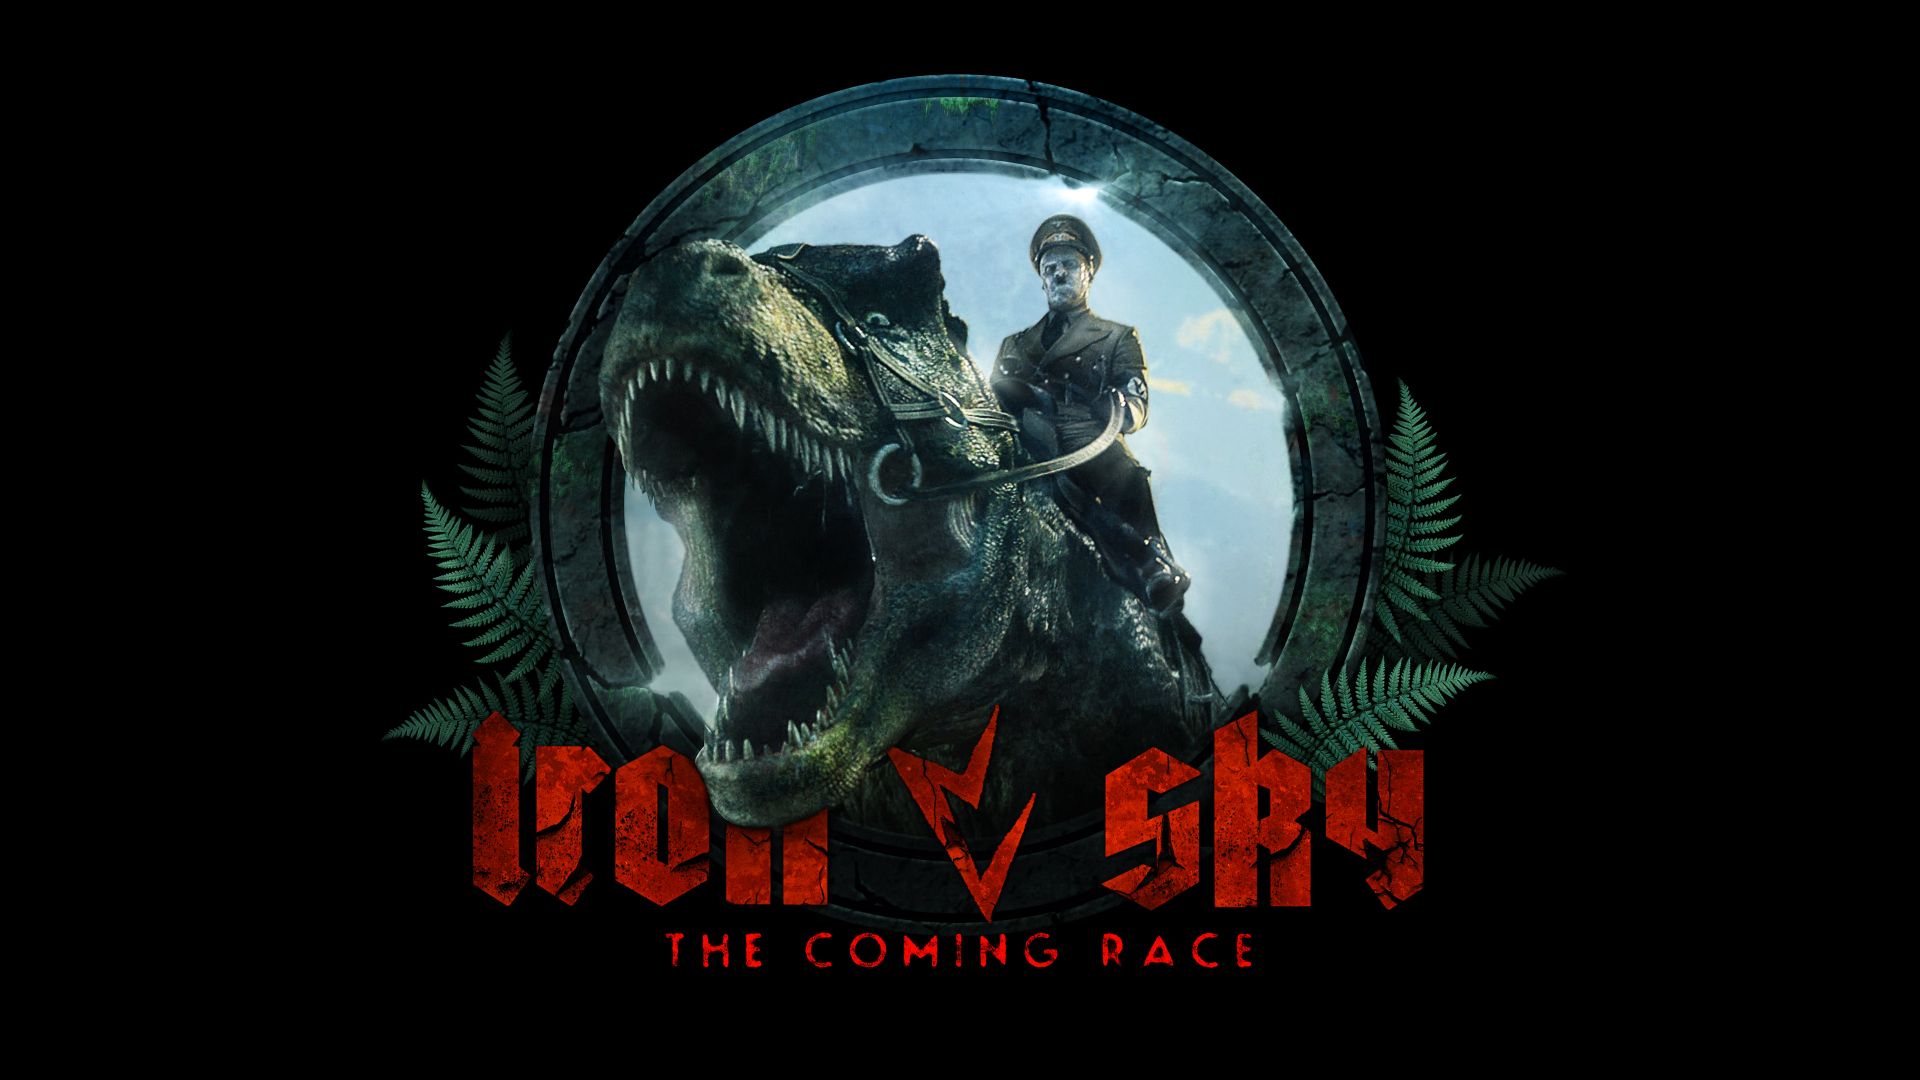 Железное небо: Грядущая раса, Iron Sky: The Coming Race, poster, 4k (horizontal)